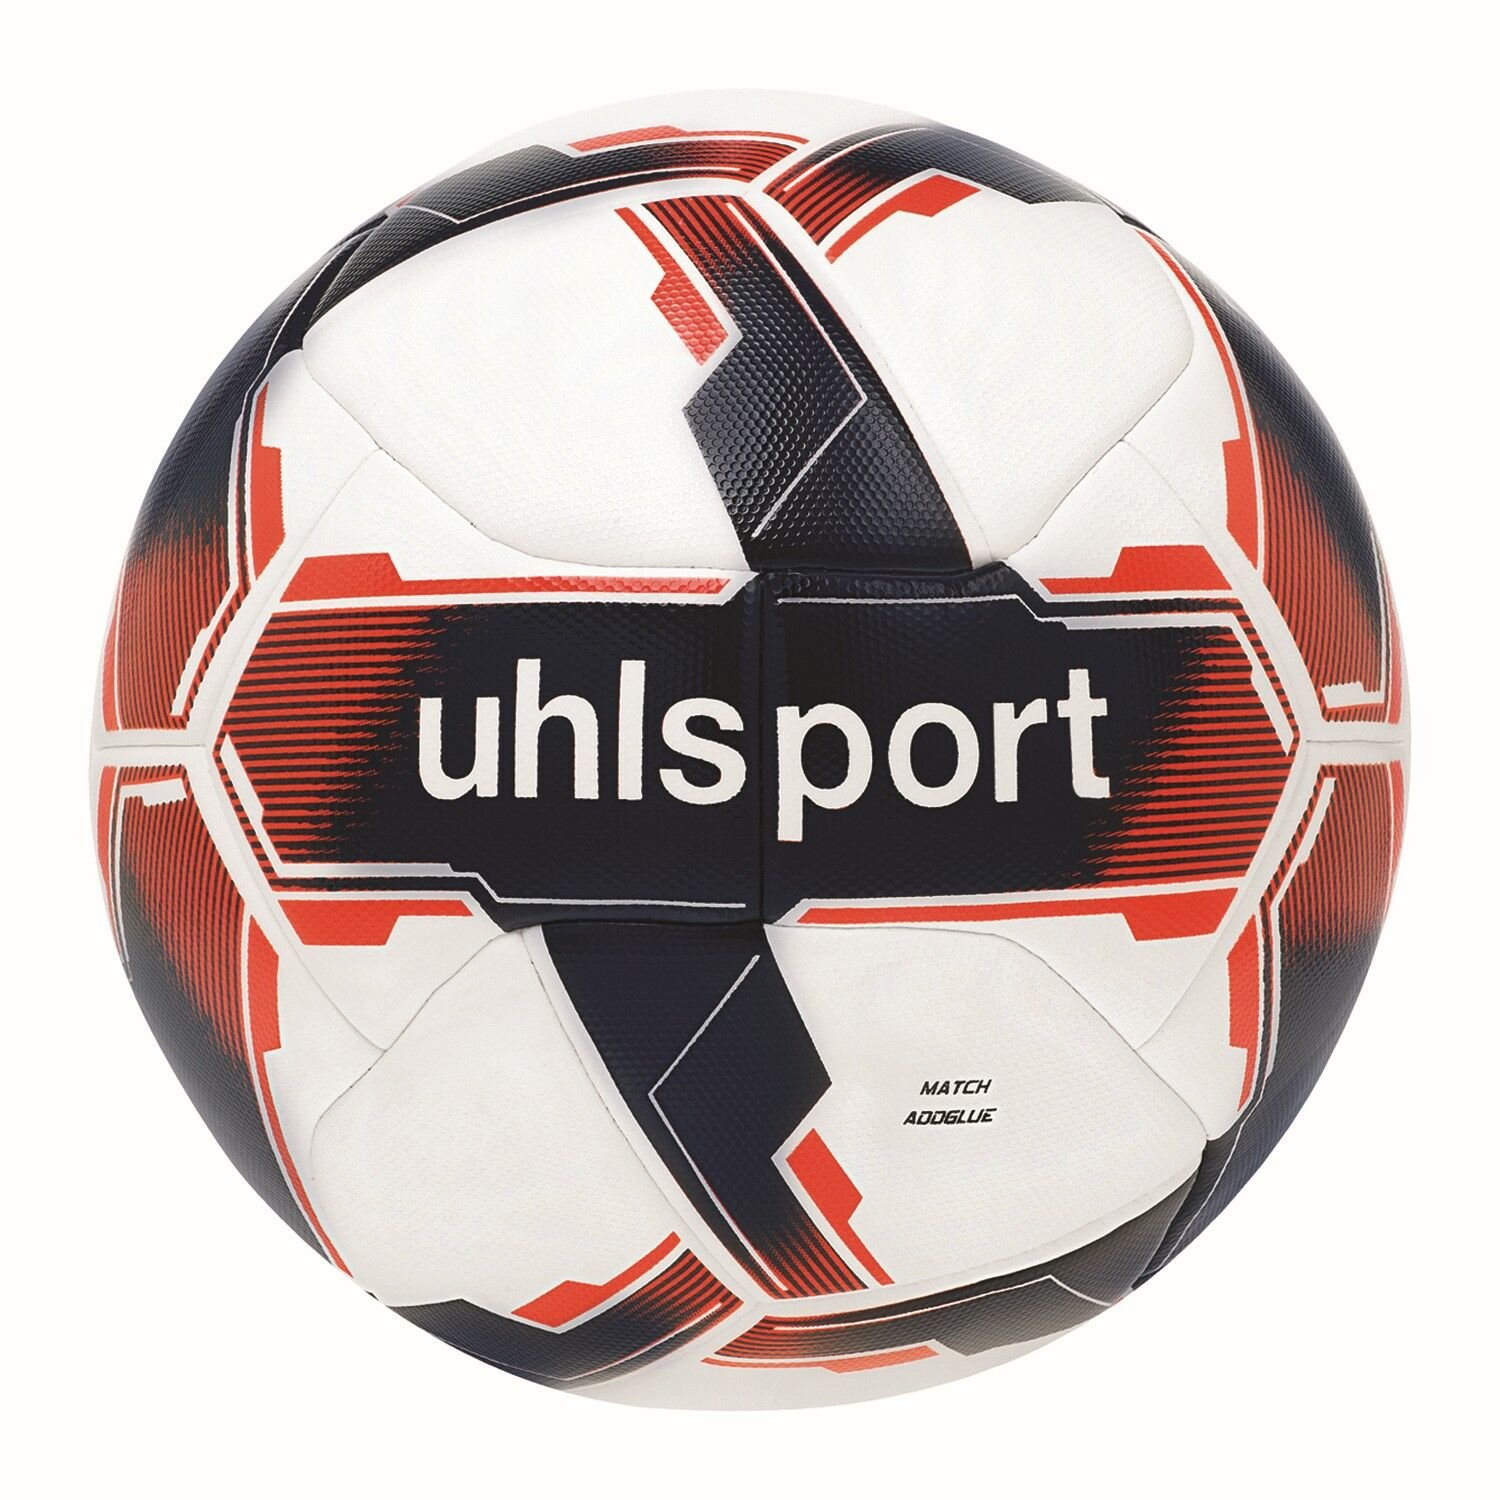 Uhlsport Match Addglue Fifa Onaylı Futbol Maç Topu Fifa Quality Pro 100175001